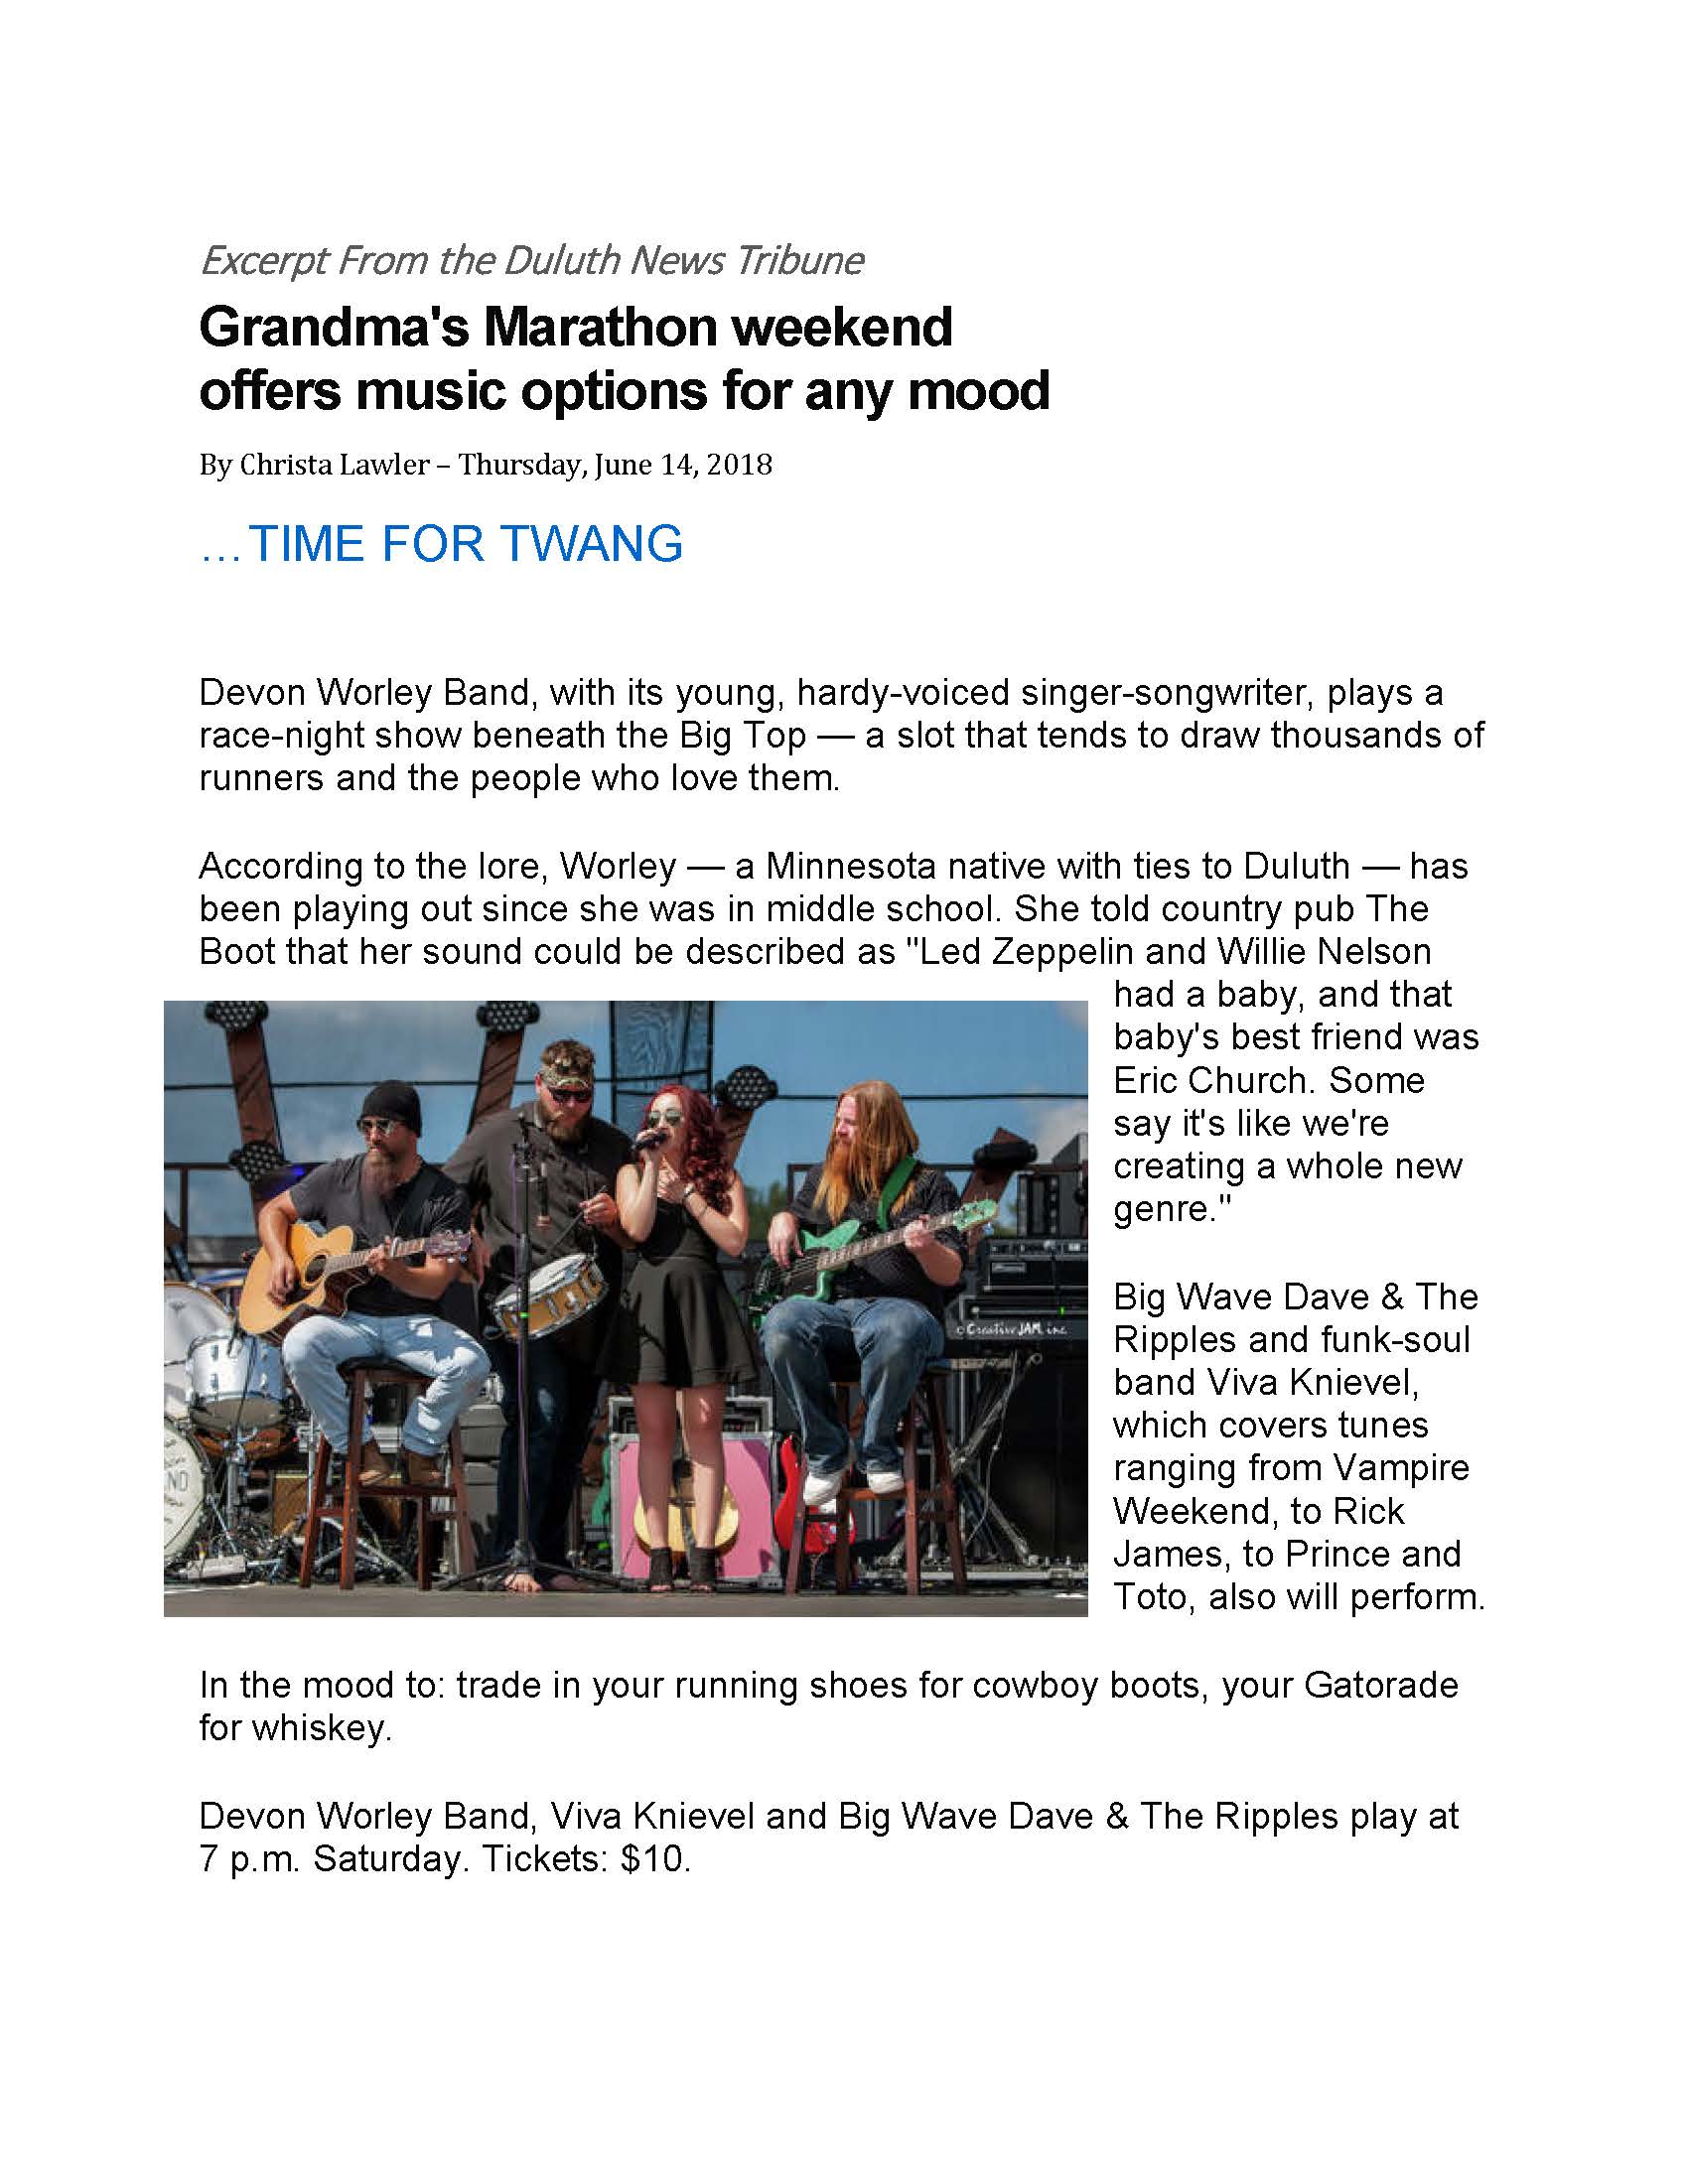 Duluth News Tribune article about Grandma's Marathon Entertainment